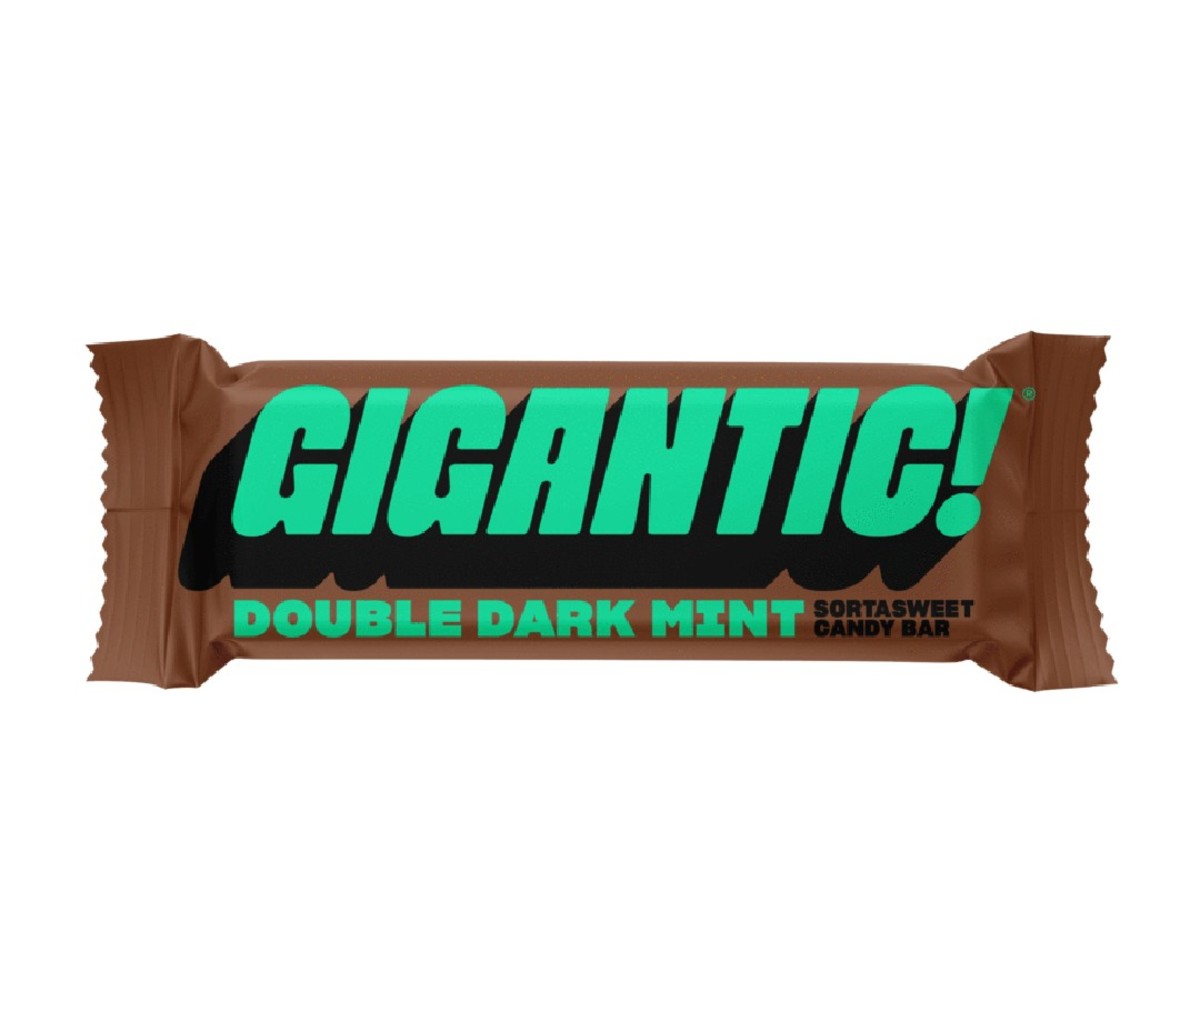 Gigantic Limited-Edition “Double Dark Mint” Vegan Candy Bar